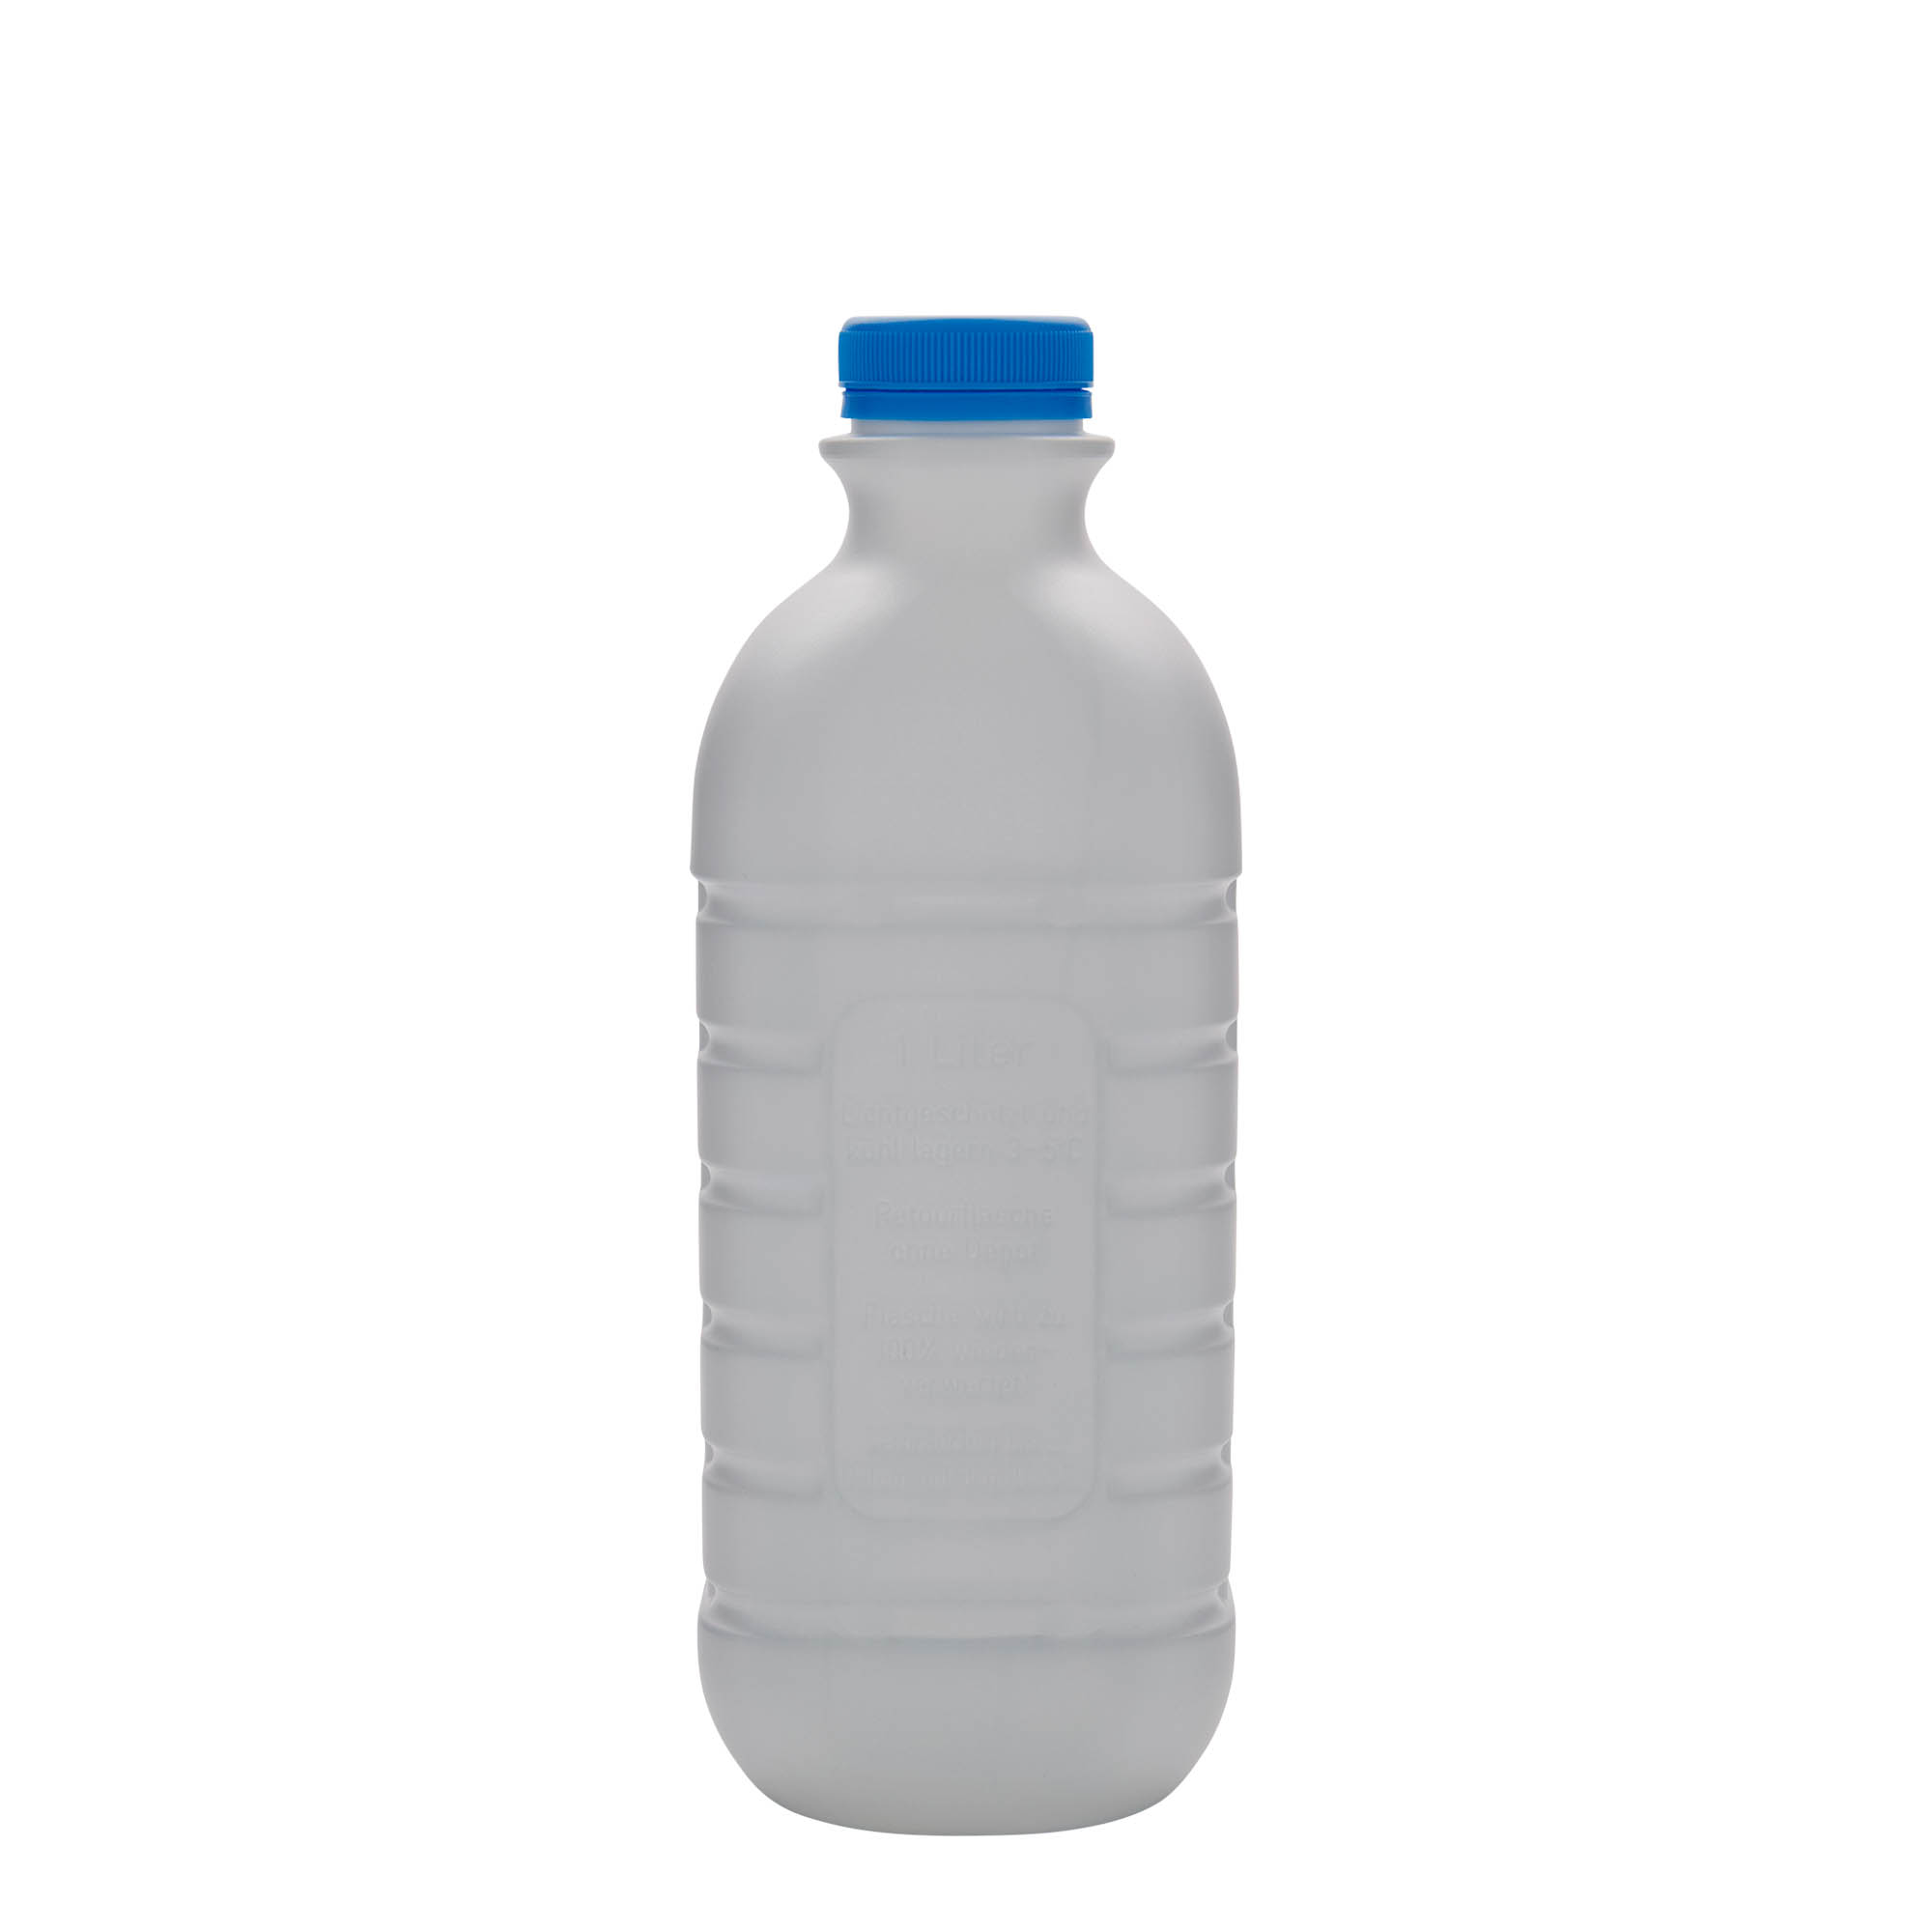 1,000 ml milk bottle, rectangular, HDPE plastic, white, closure: PEHD40